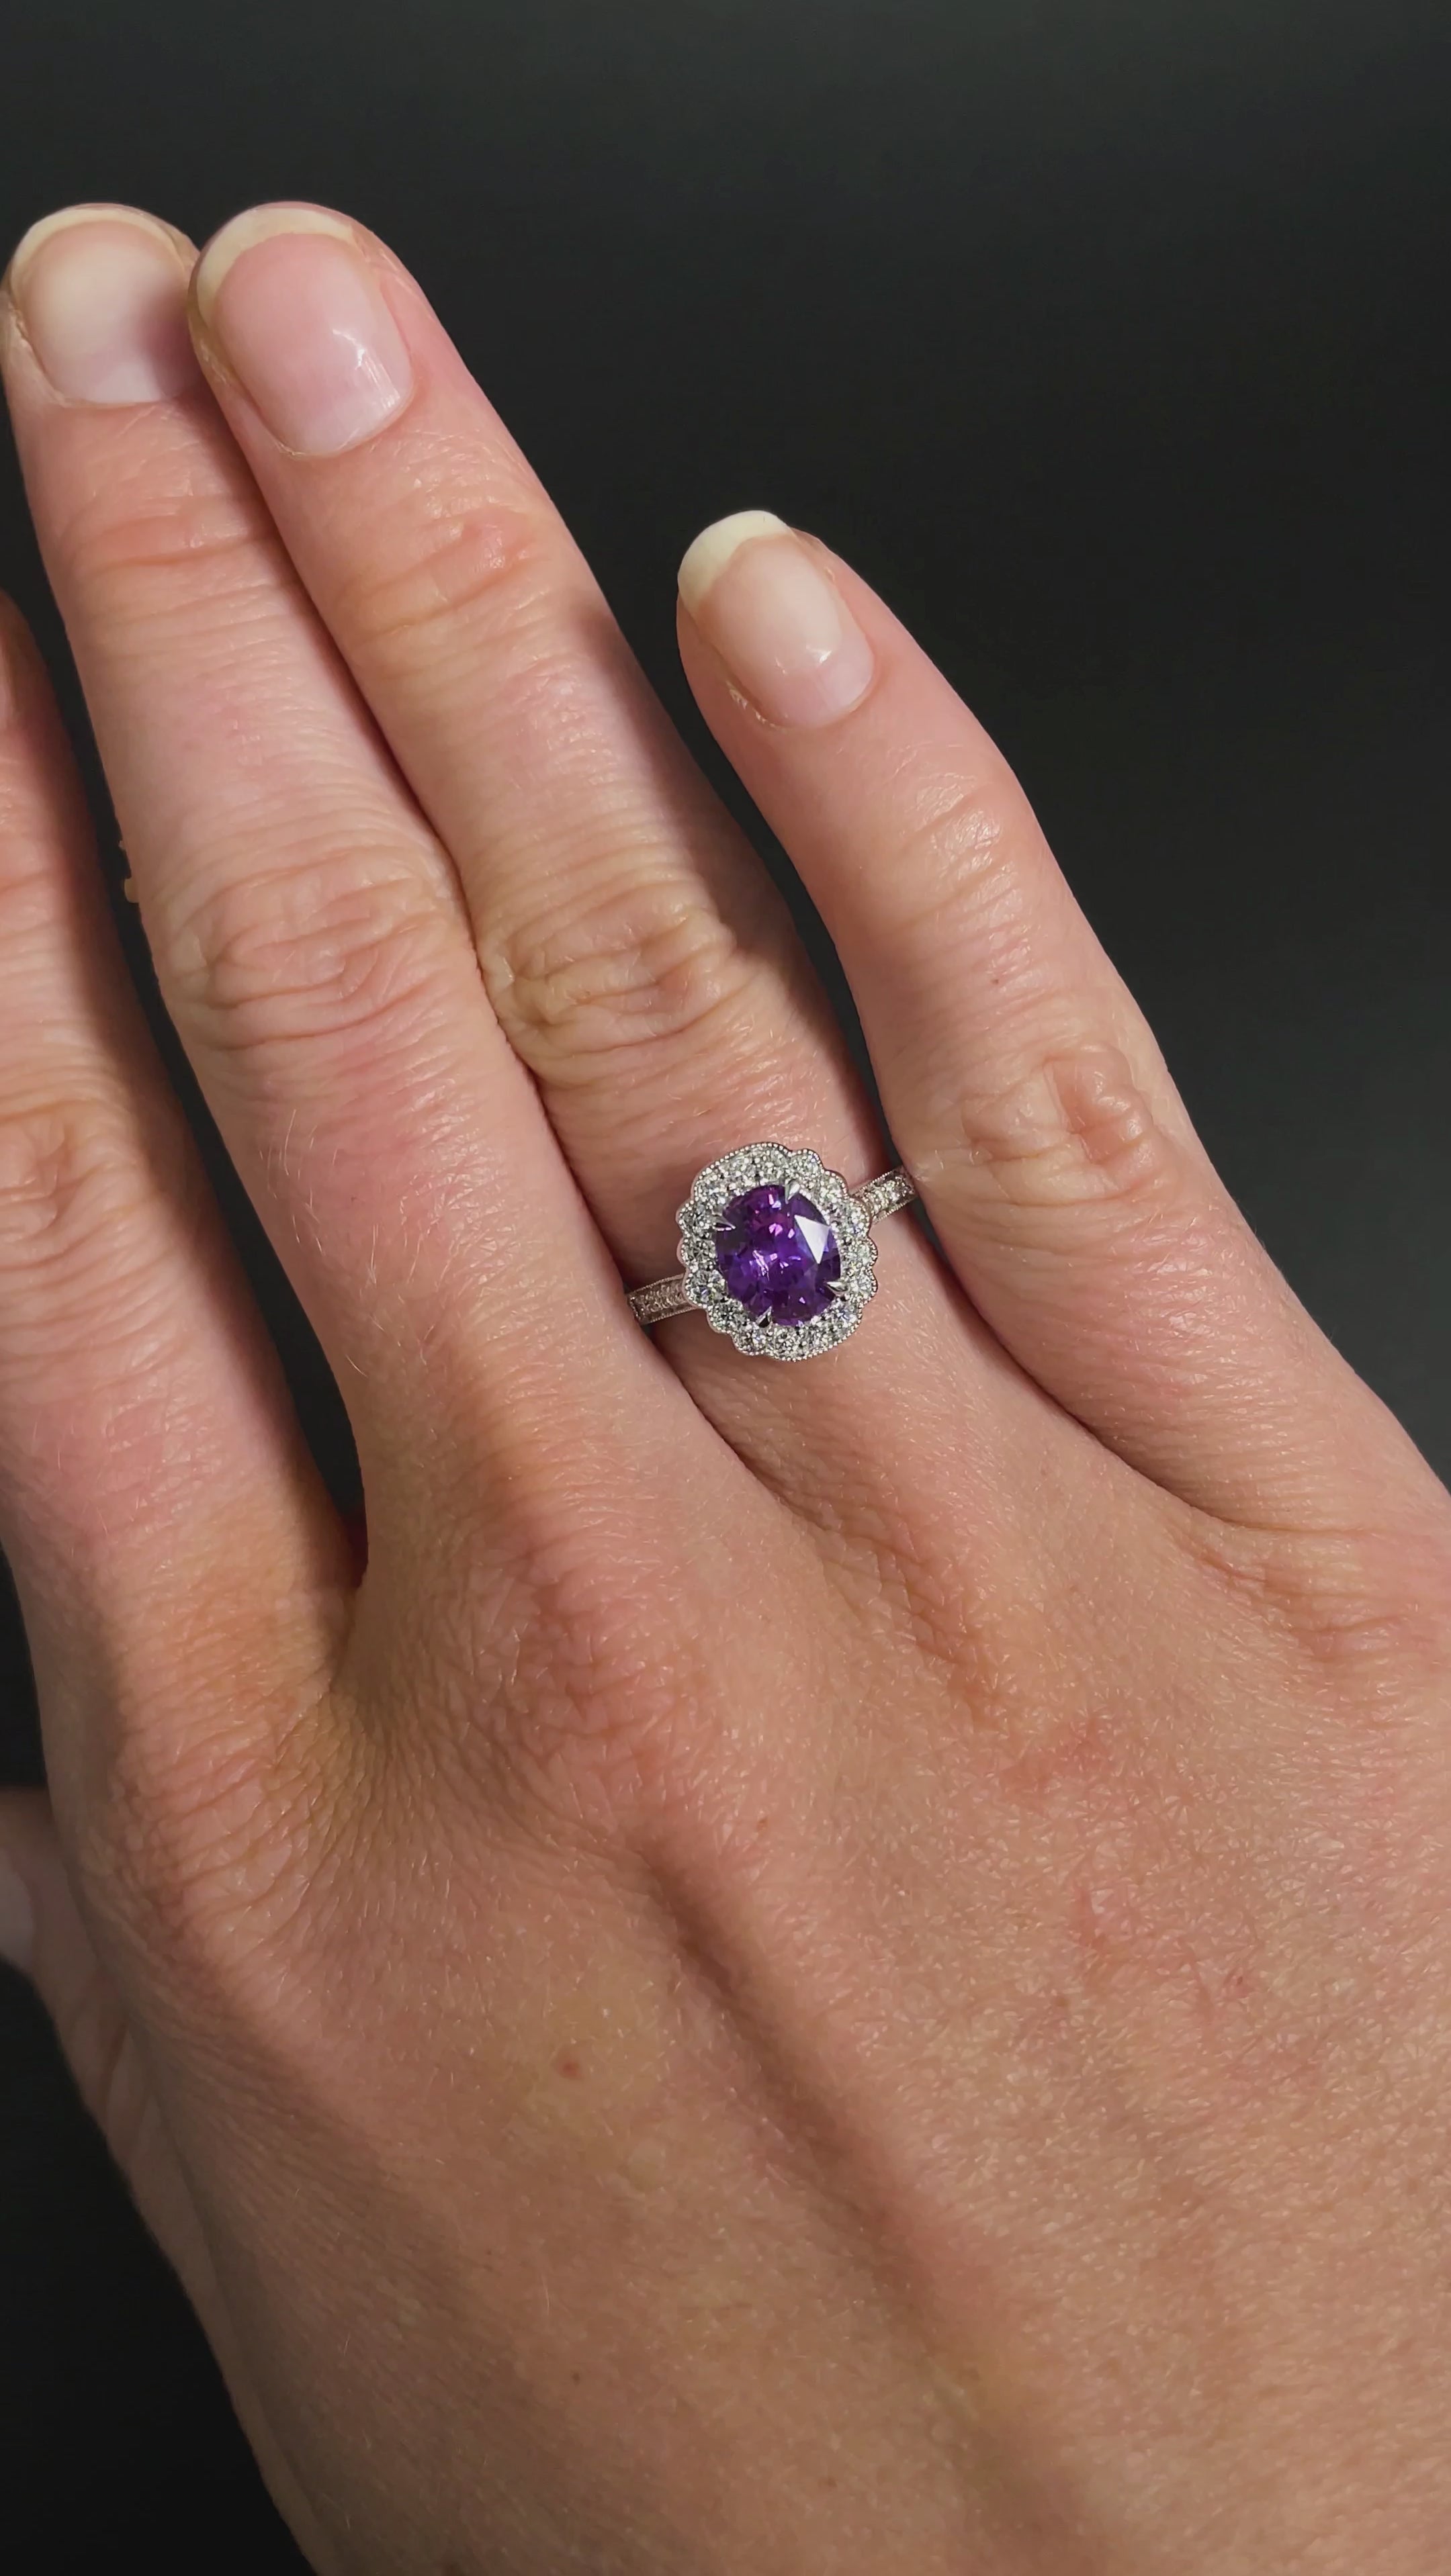 18 Carat White Gold With 1.56 Carat Purple Sapphire Diamond Halo Ring available at LeGassick Diamonds and Jewellery Gold Coast, Australia.